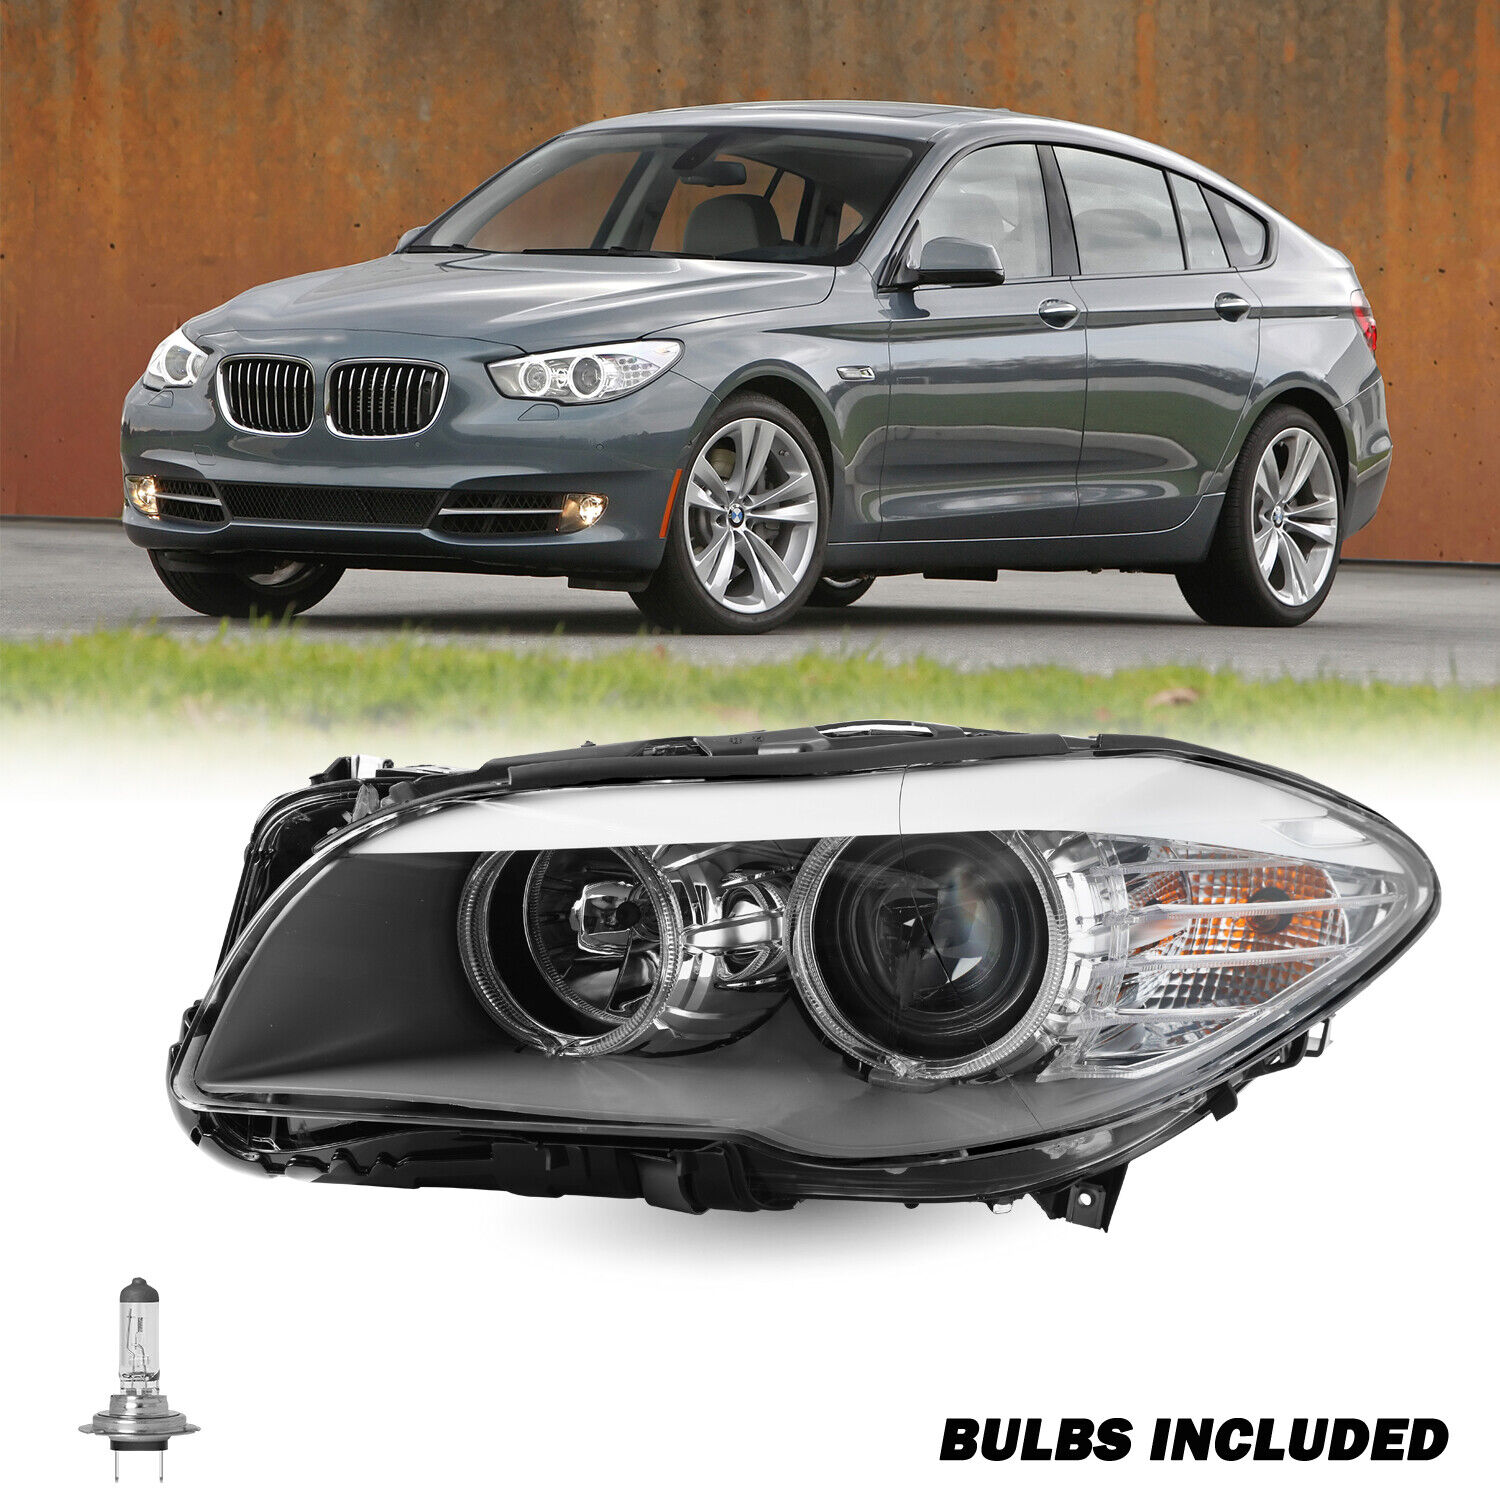 Headlight for BMW 5 series 528i 535i 550i 2011-2013 Driver Side Halogen Lamp